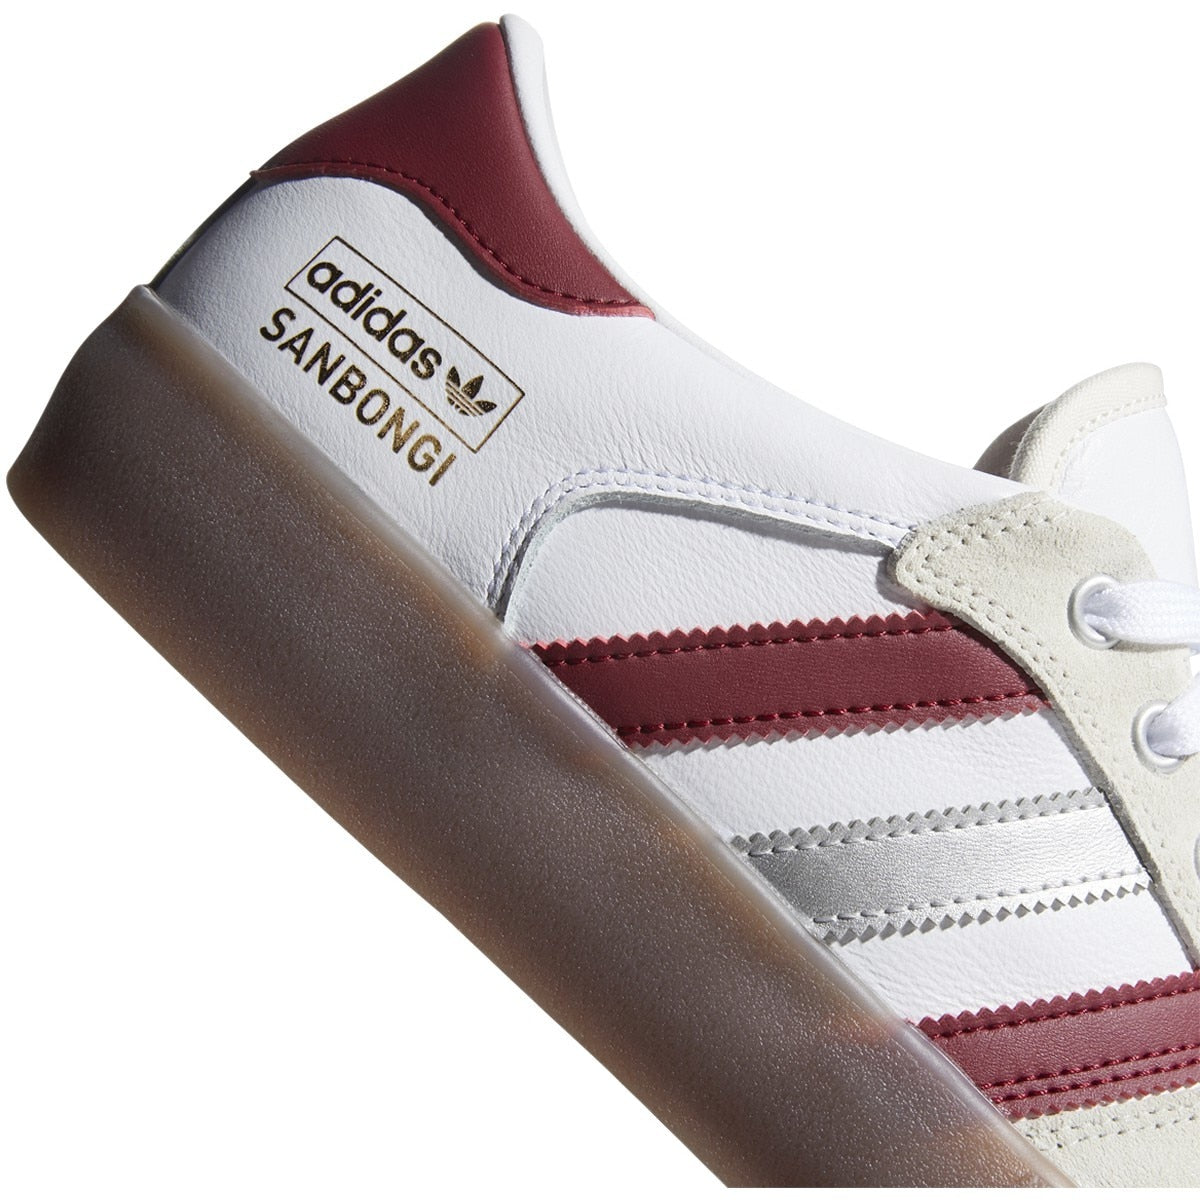 Adidas Matchbreak Super x Shin Skate Shoe - White/Collegiate Burgundy/Gum